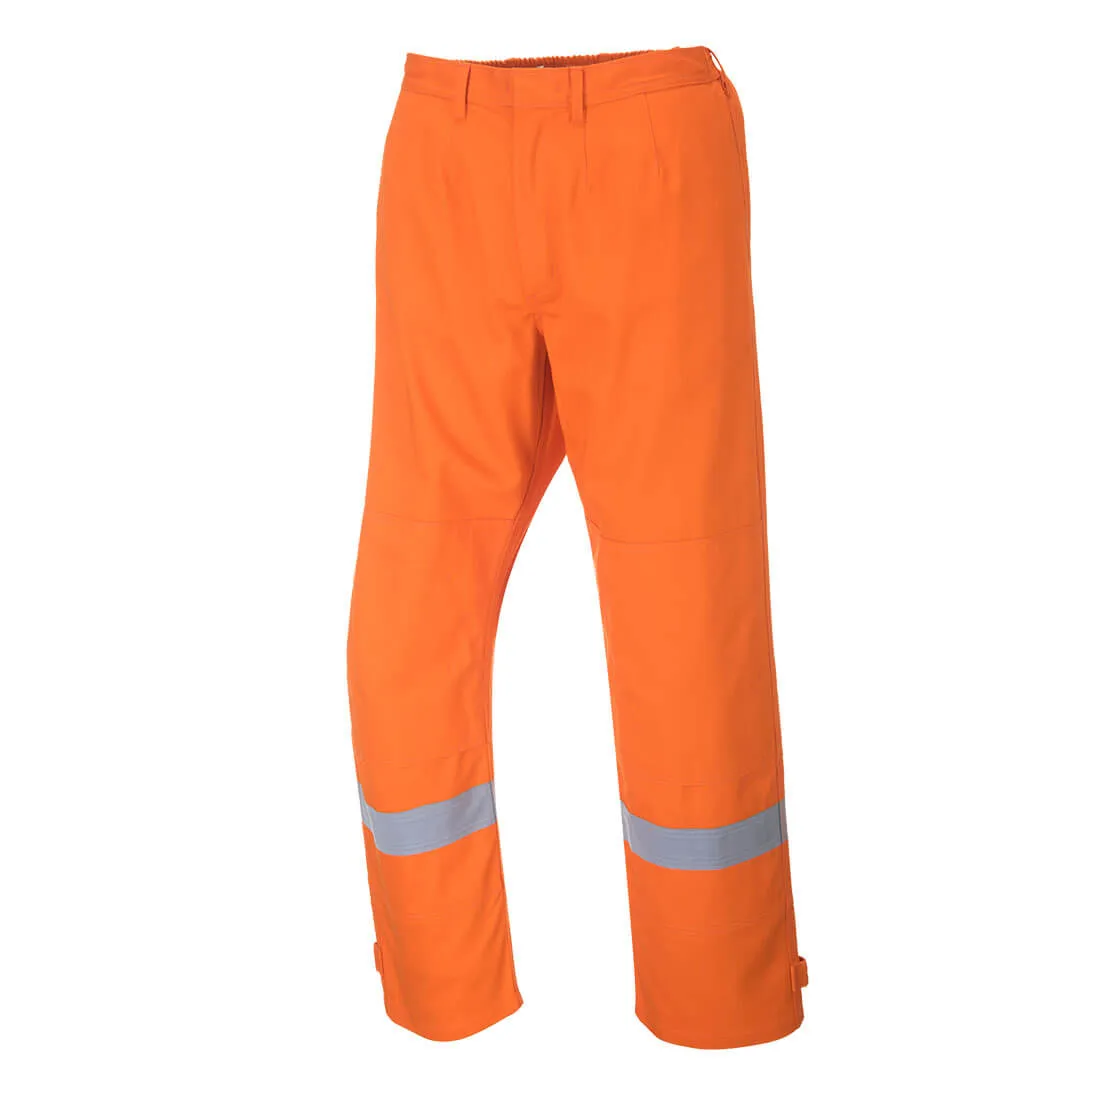 Biz Flame Plus Mens Flame Resistant Trousers - Orange, Large, 32"